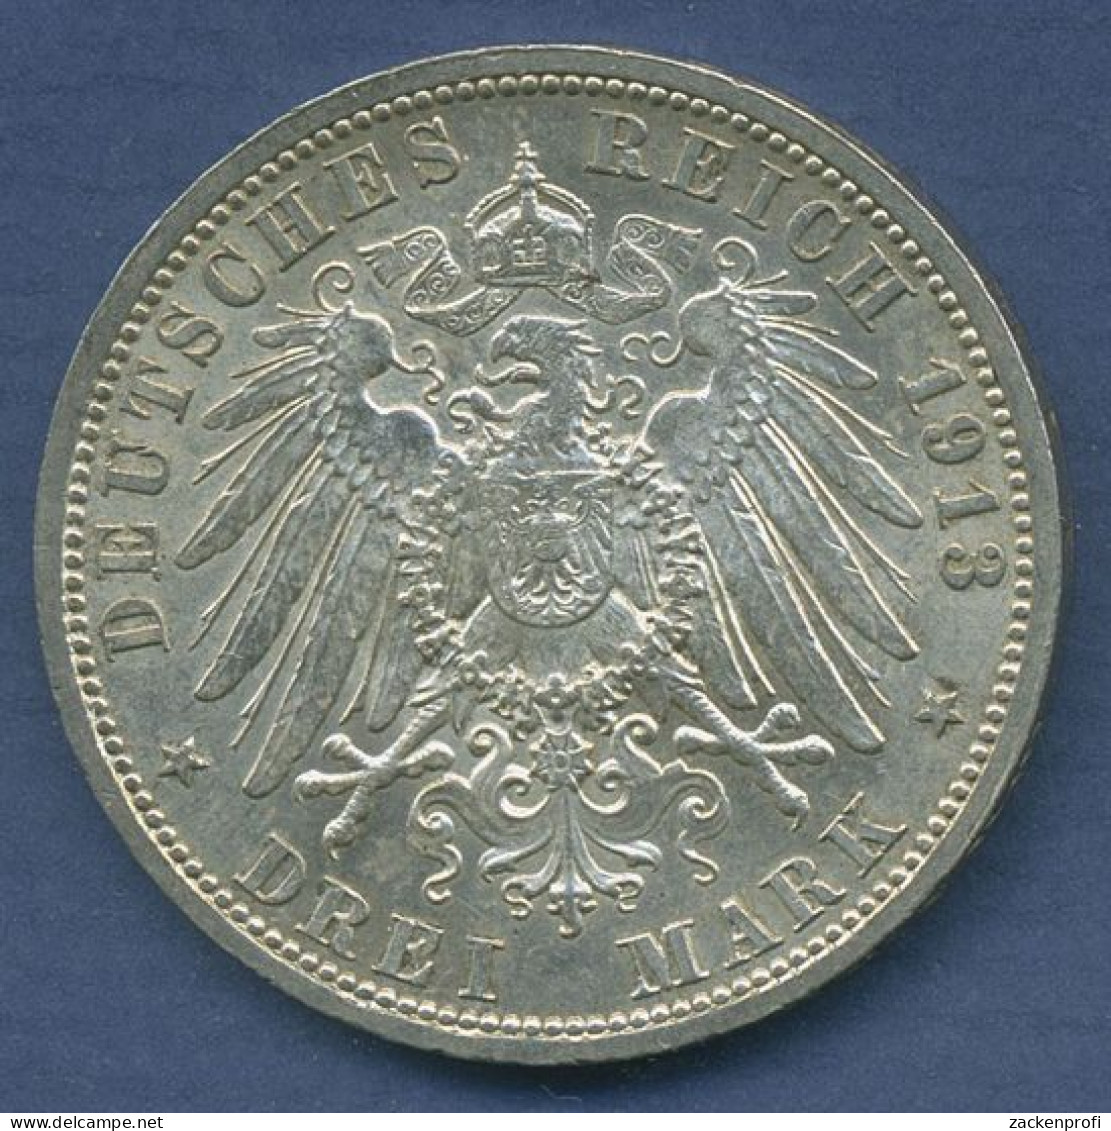 Preußen 3 Mark 1913 A, 25 Jähriges Regierungsjubiläum, J 112 Vz/st (m6576) - 2, 3 & 5 Mark Silver